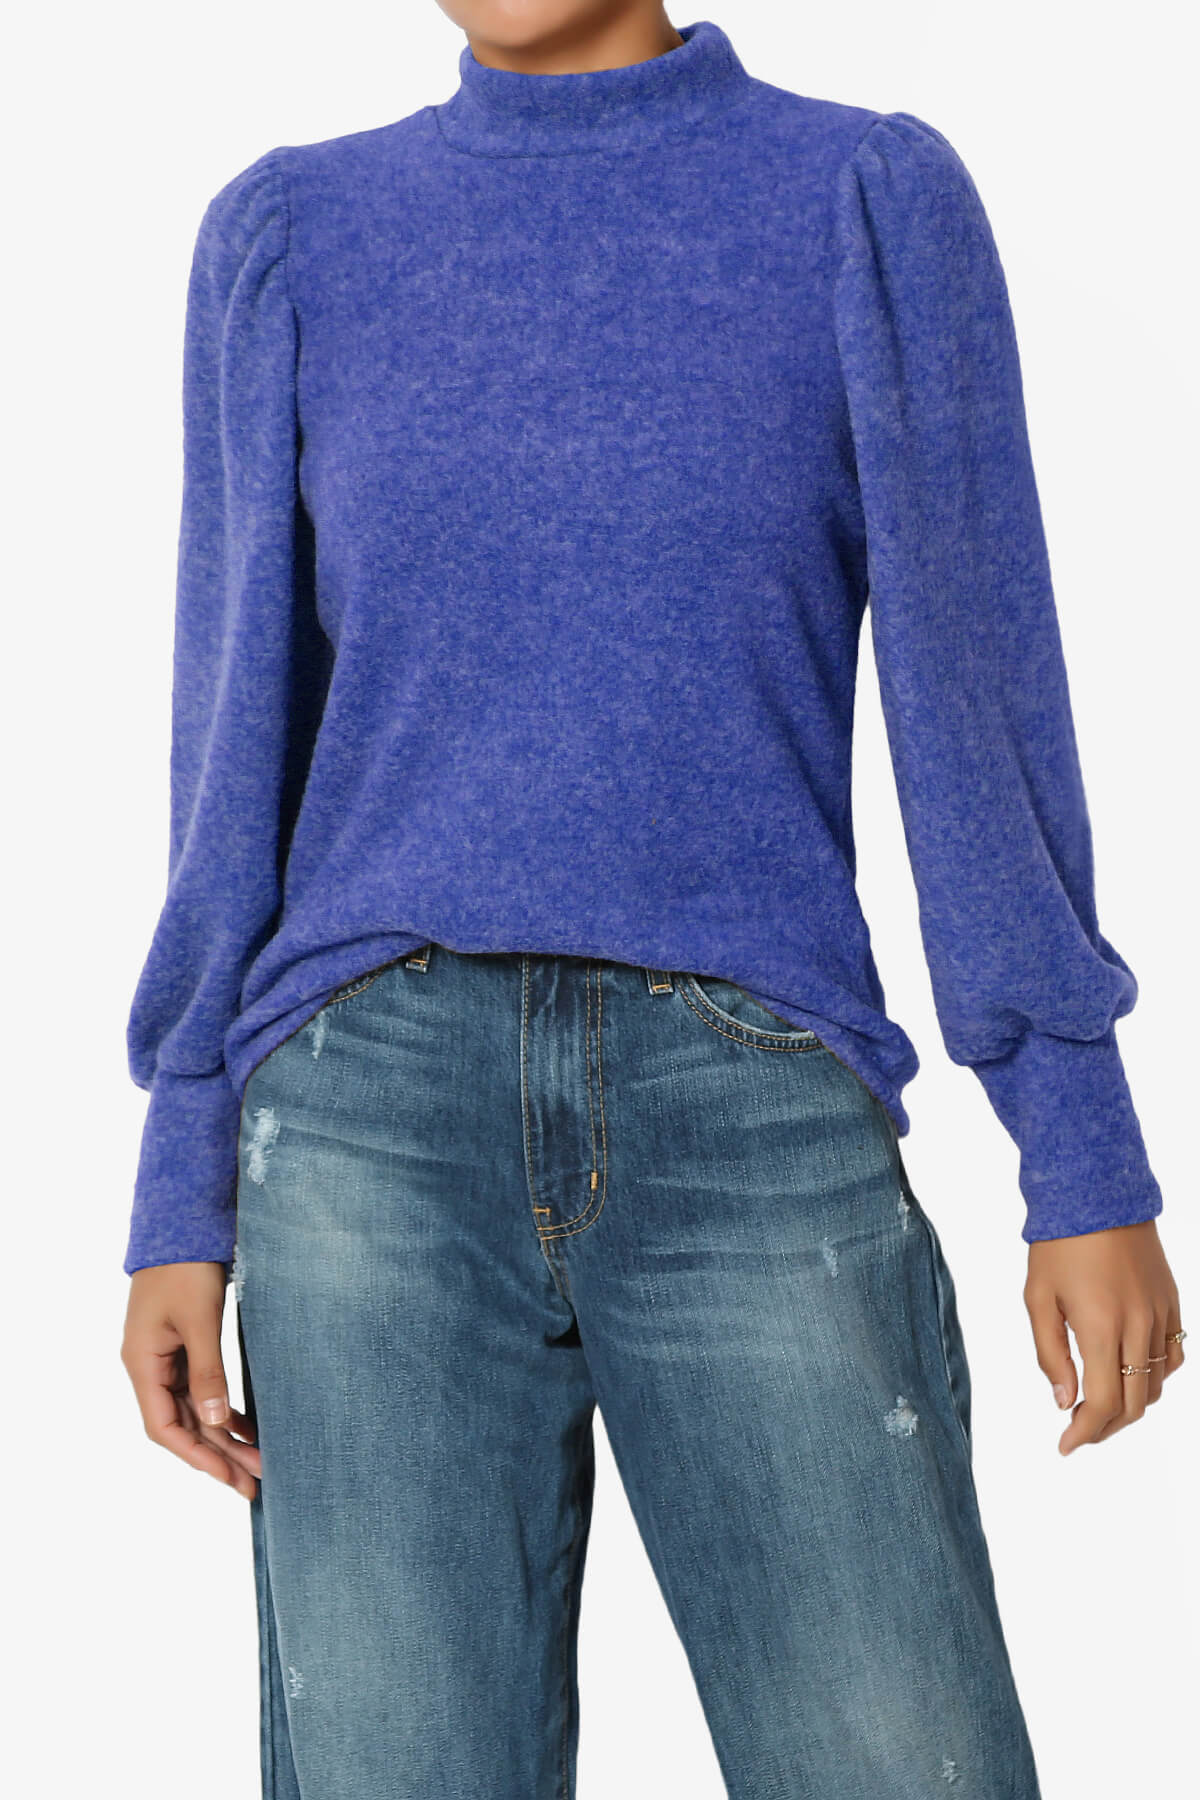 Killa Puff Long Sleeve Mock Neck Knit Sweater BRIGHT BLUE_1